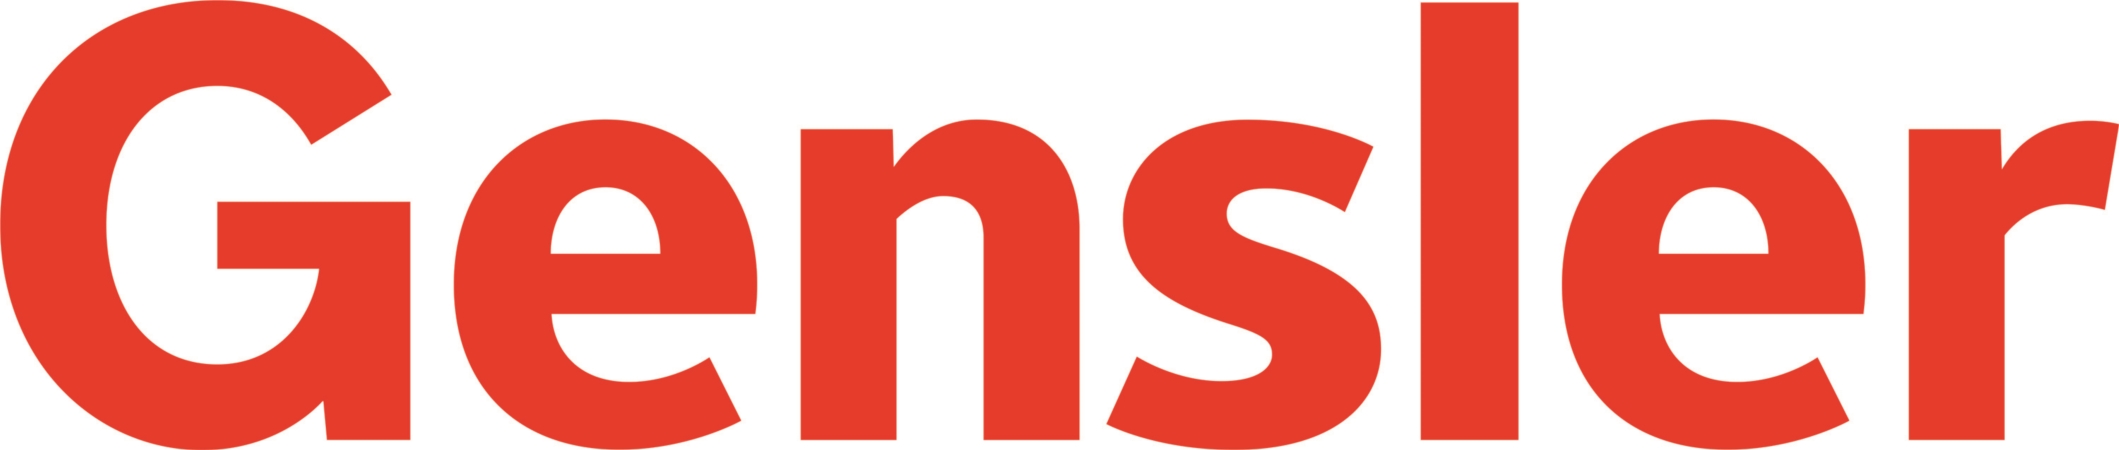 Gensler Company Logo